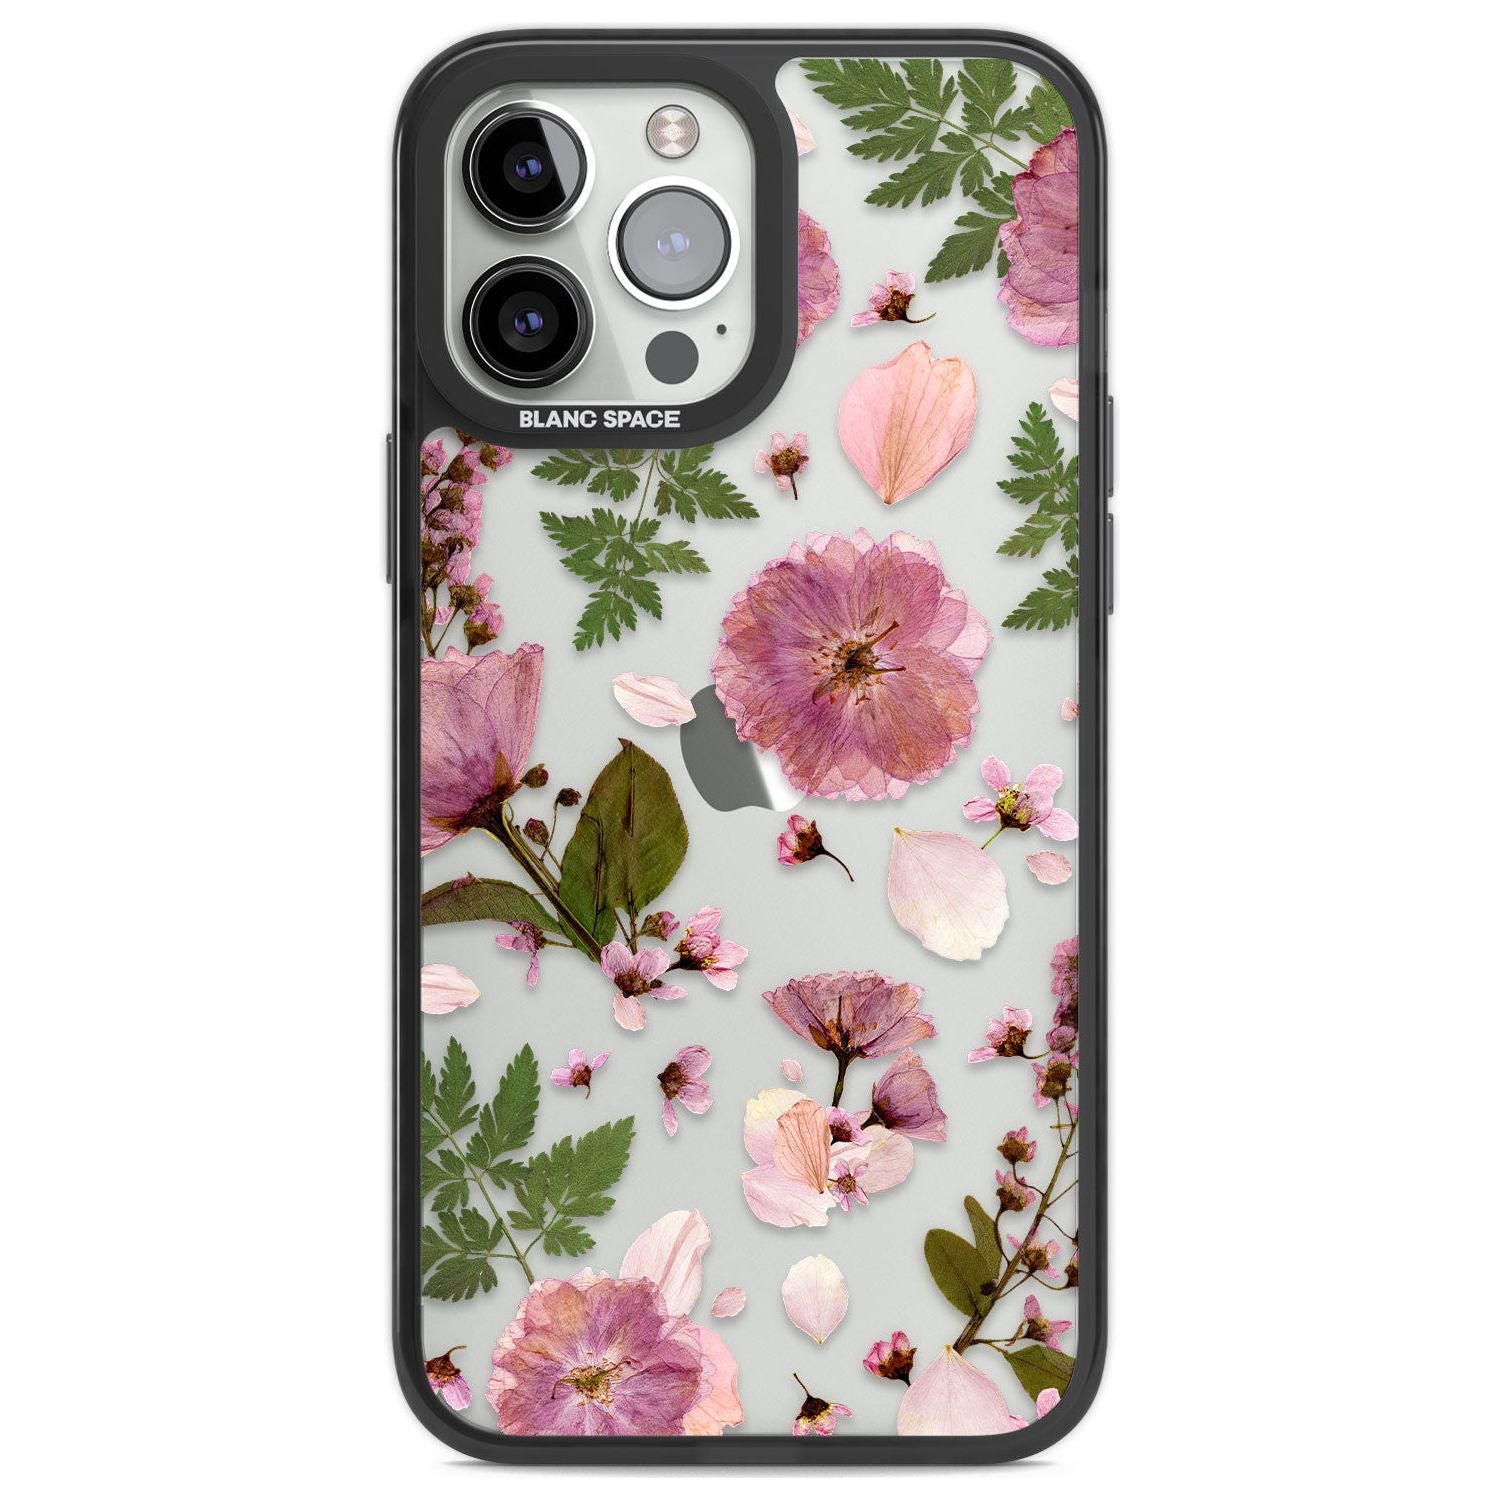 Natural Arrangement of Flowers & Leaves Design Phone Case iPhone 13 Pro Max / Black Impact Case,iPhone 14 Pro Max / Black Impact Case Blanc Space